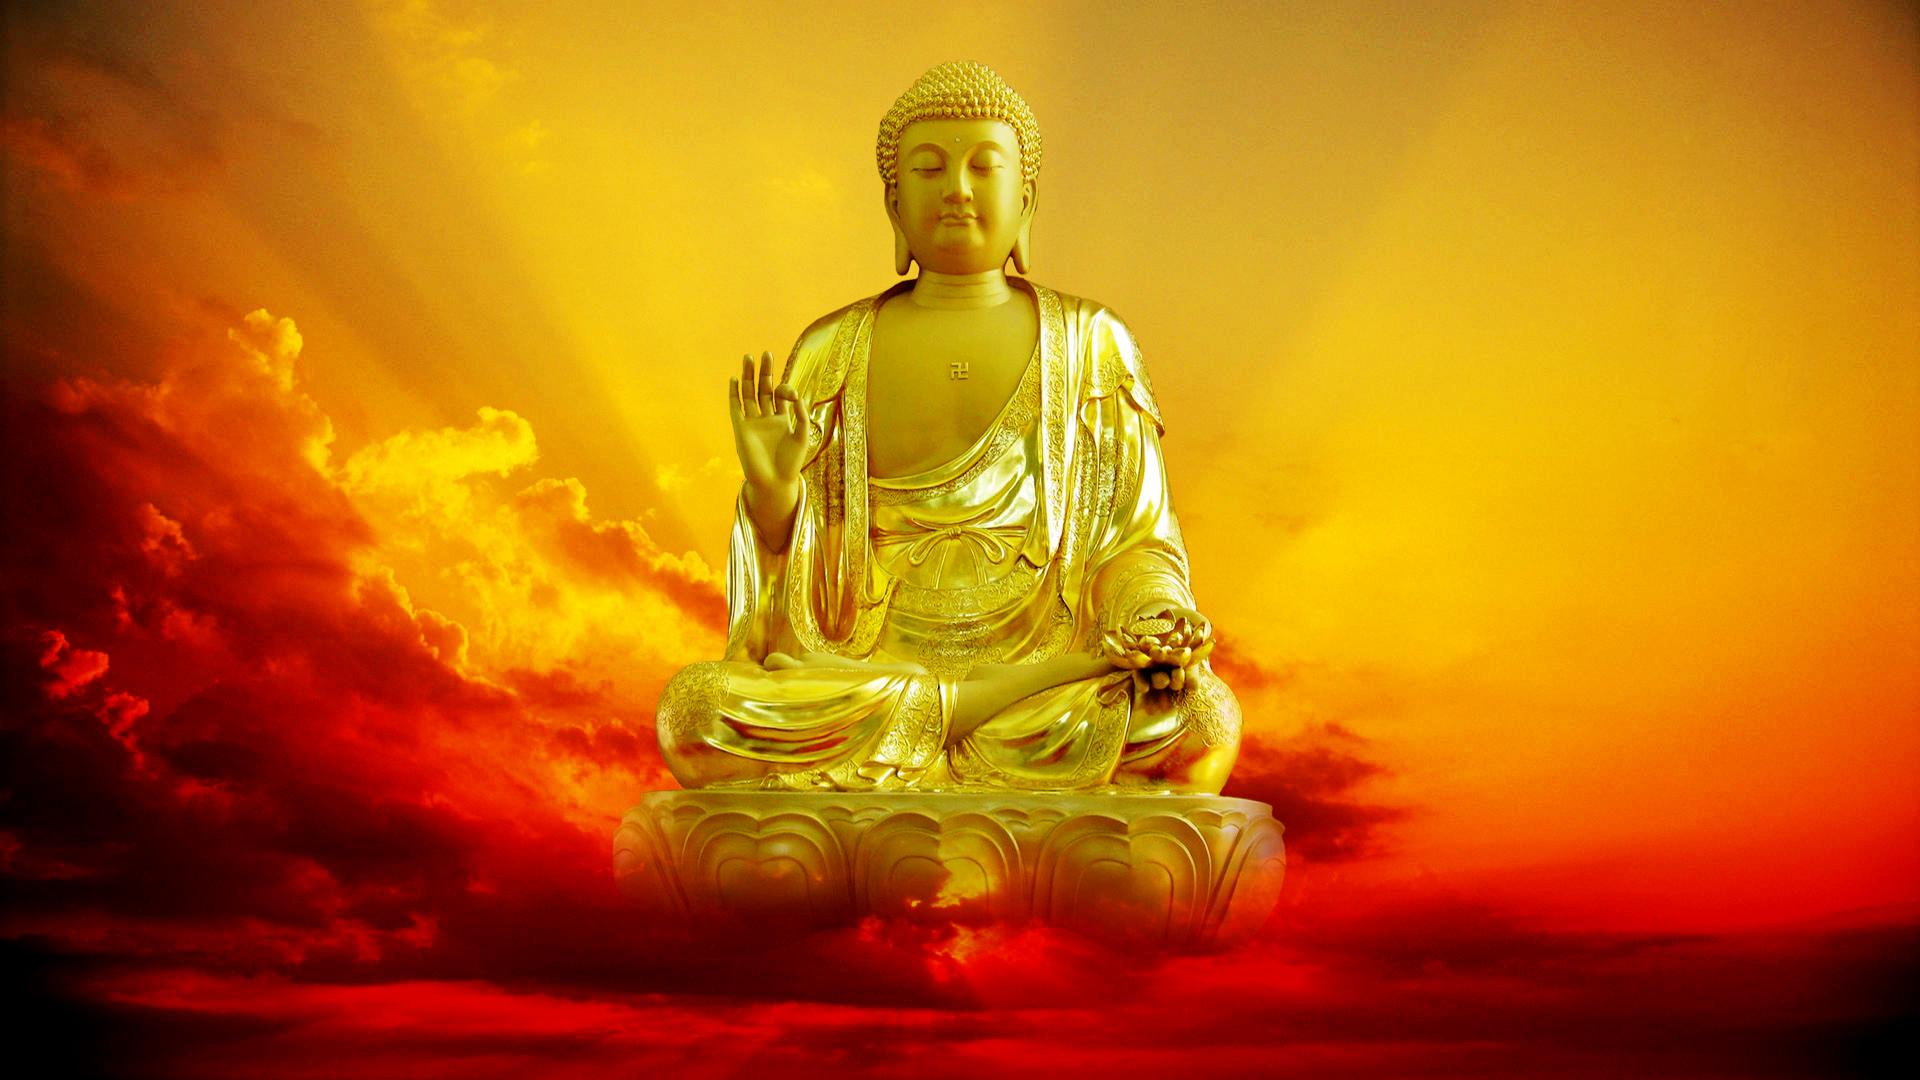 Buddha HD Wallpaper 1080p Download. Hindu Gods and Goddesses